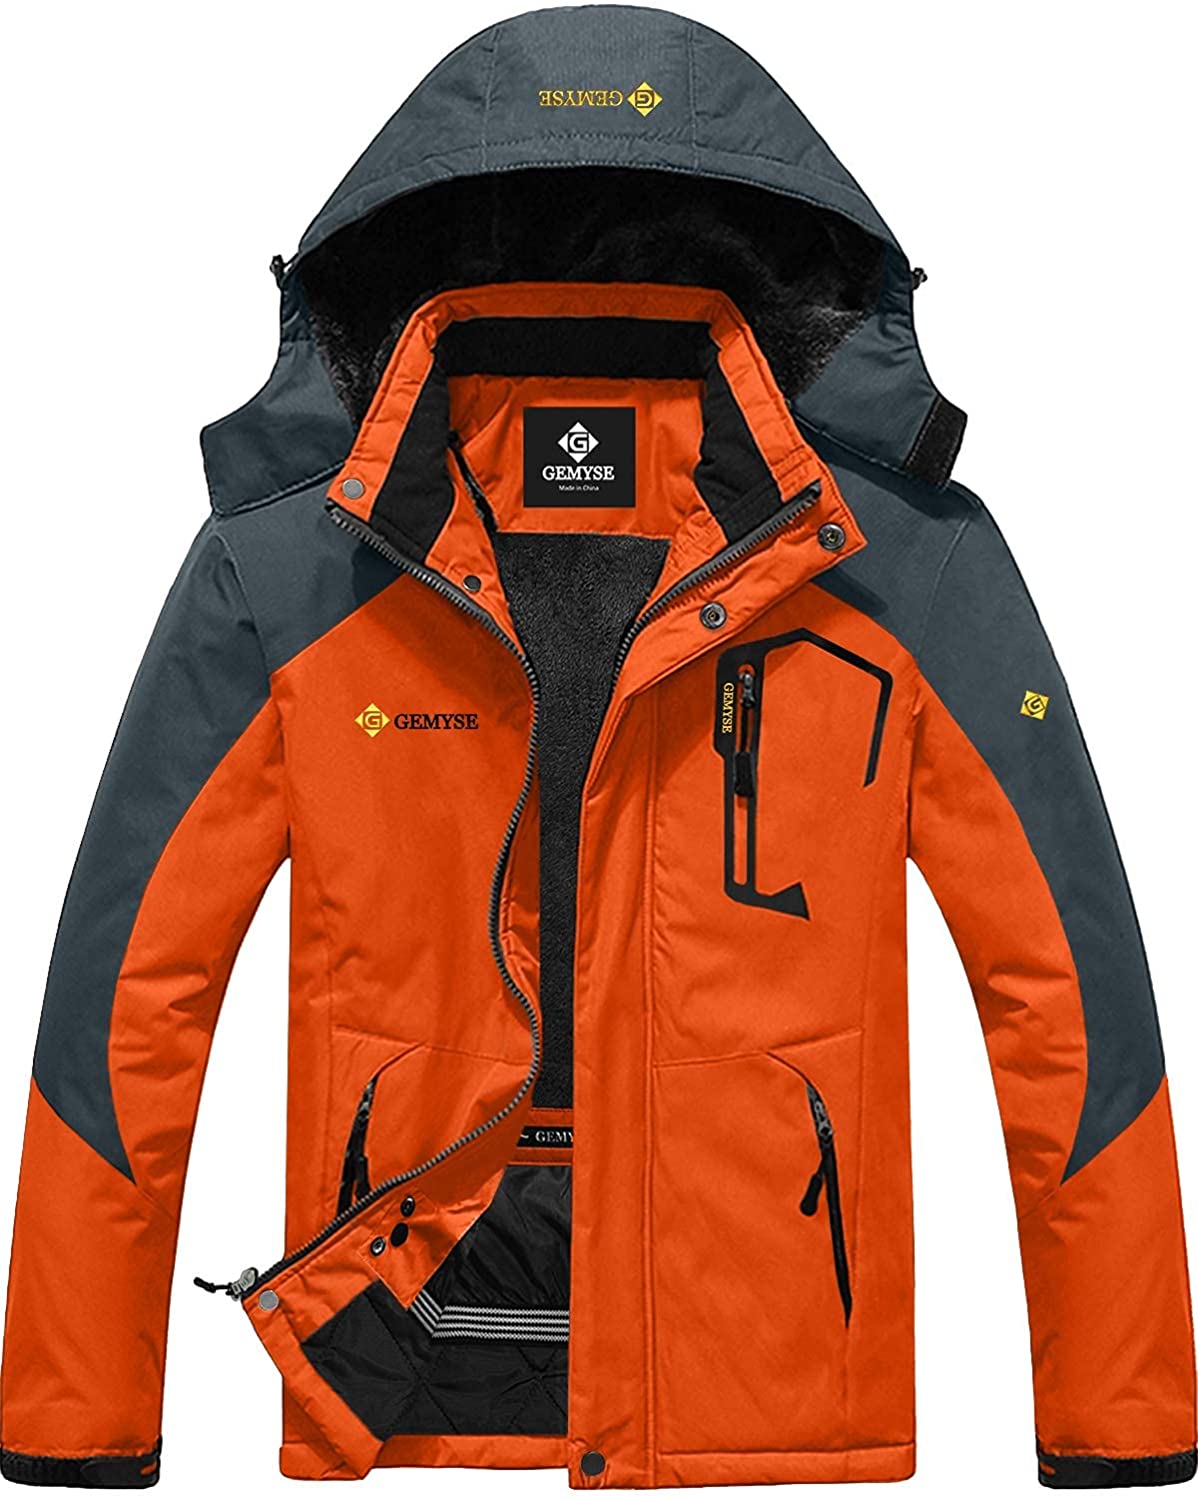 GEMYSE Men's Mountain Waterproof Ski Snow Jacket Winter Windproof